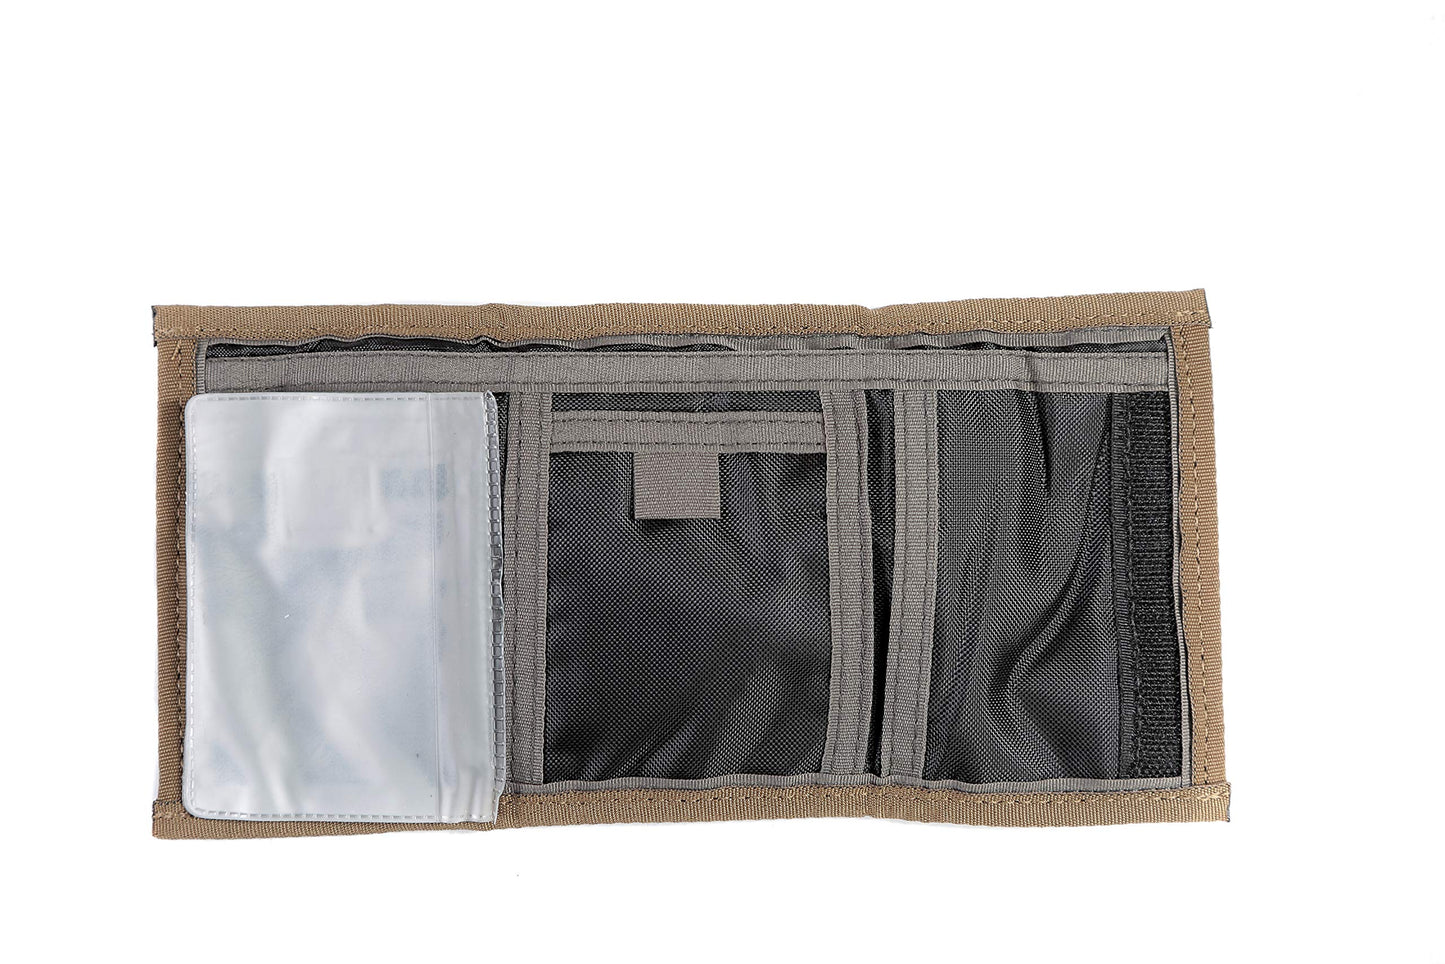 Raine Military MultiCam Trifold Wallet - Trifold Wallets for Men - Tactical Wallet - Mens Military Accessories - Mens Wallet - Velcro Wallet